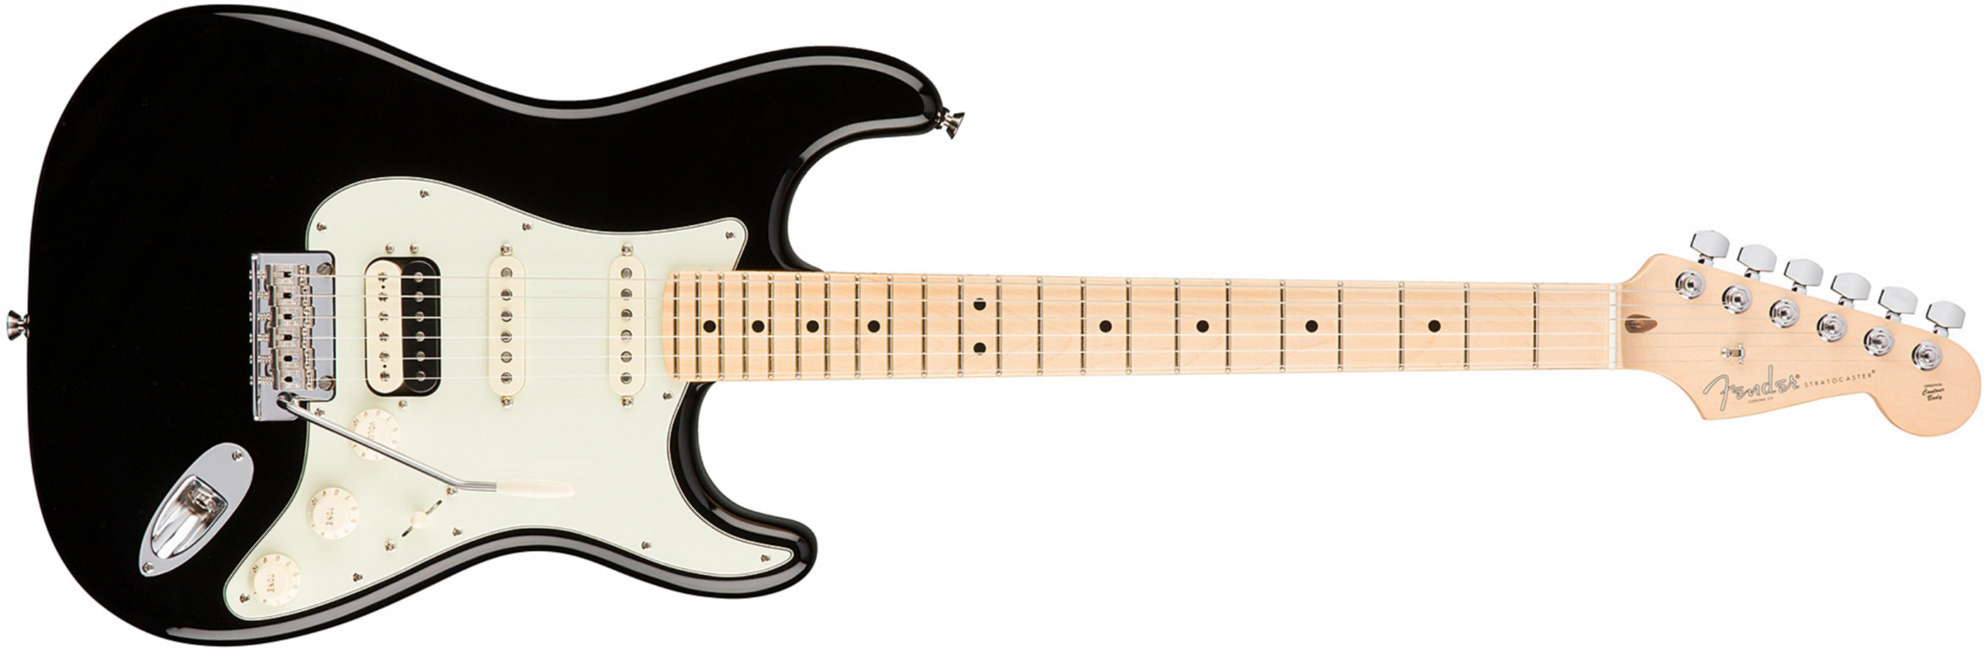 Fender Strat Hss Shawbucker American Professional Usa Mn - Black - Str shape electric guitar - Main picture